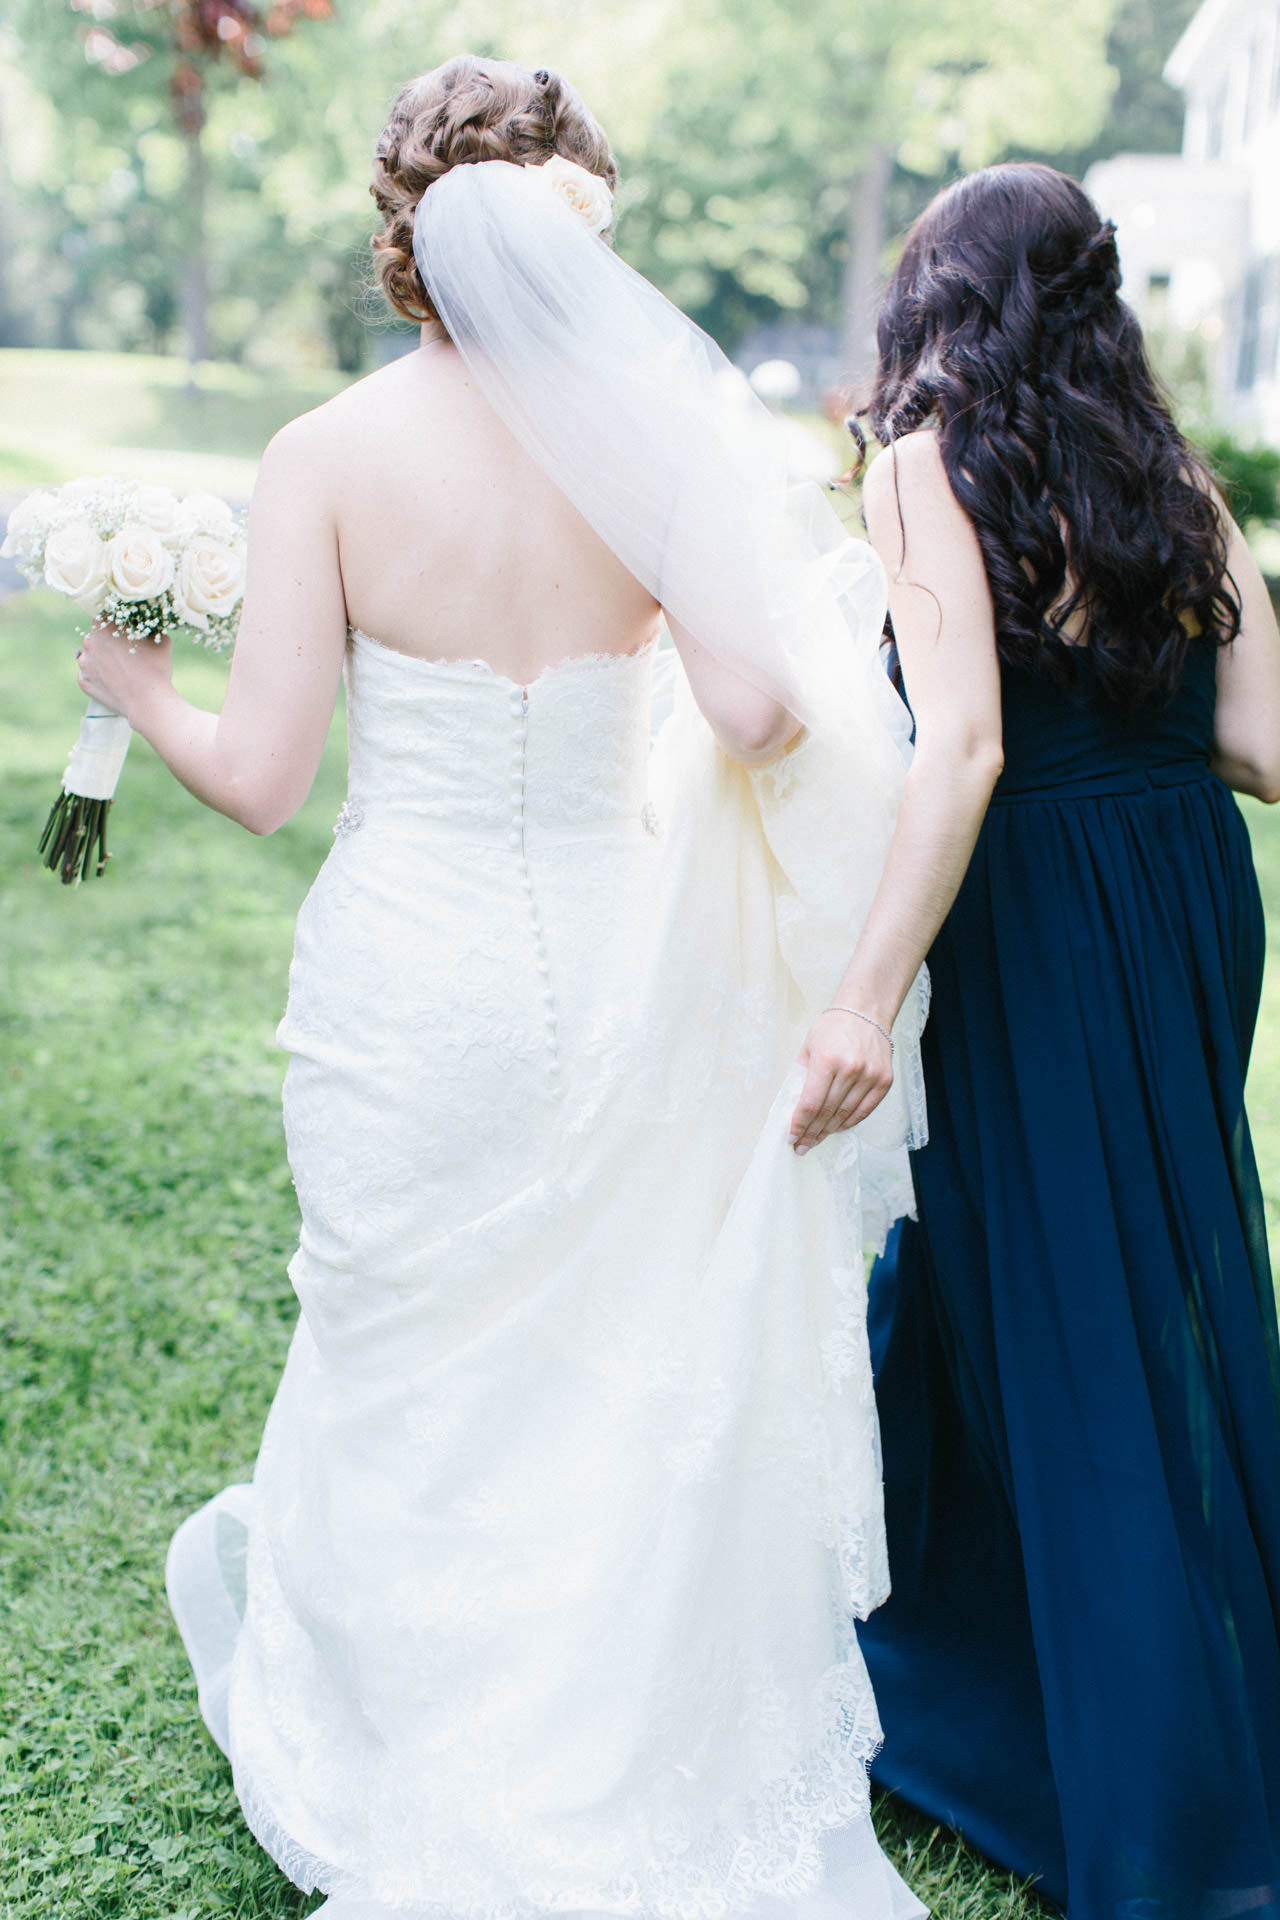 Bride and bridesmaid walking